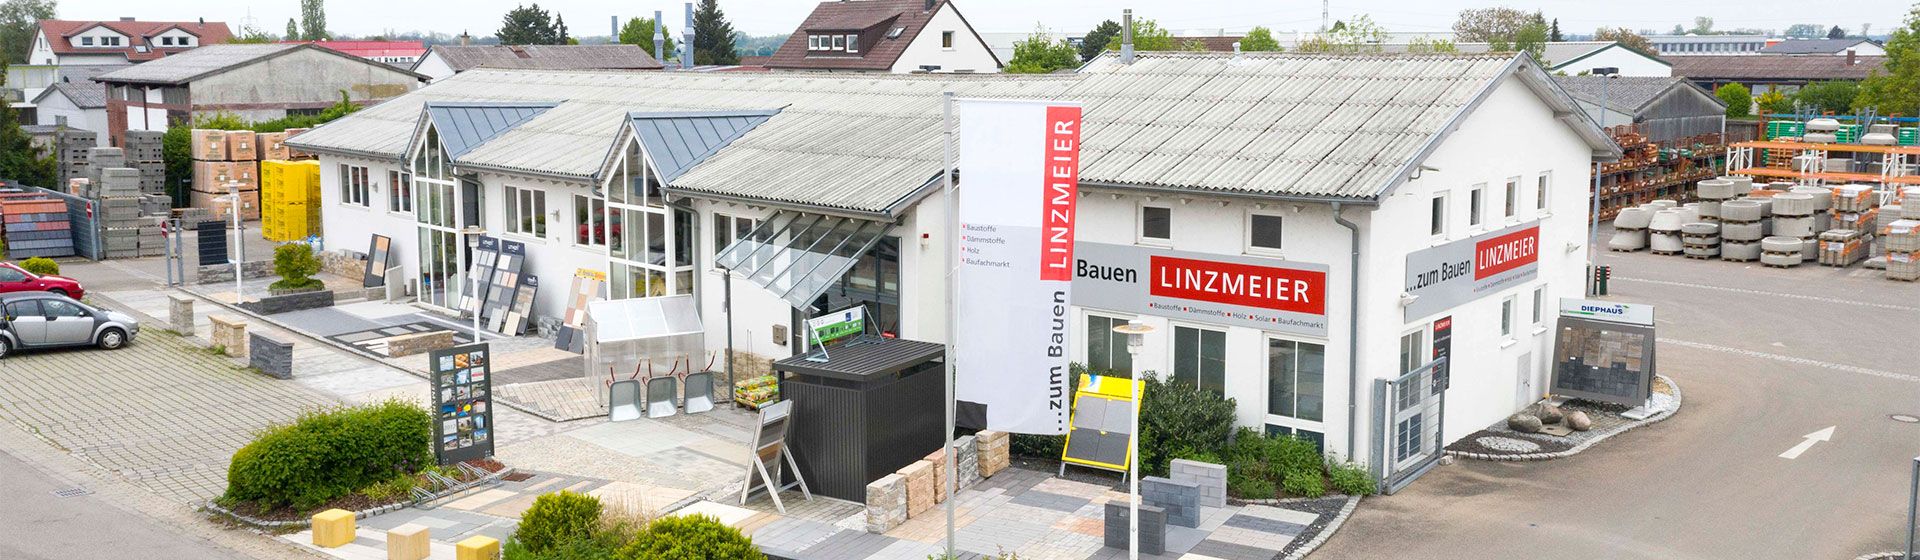 Linzmeier Baustoffe - Luftbild Langenau